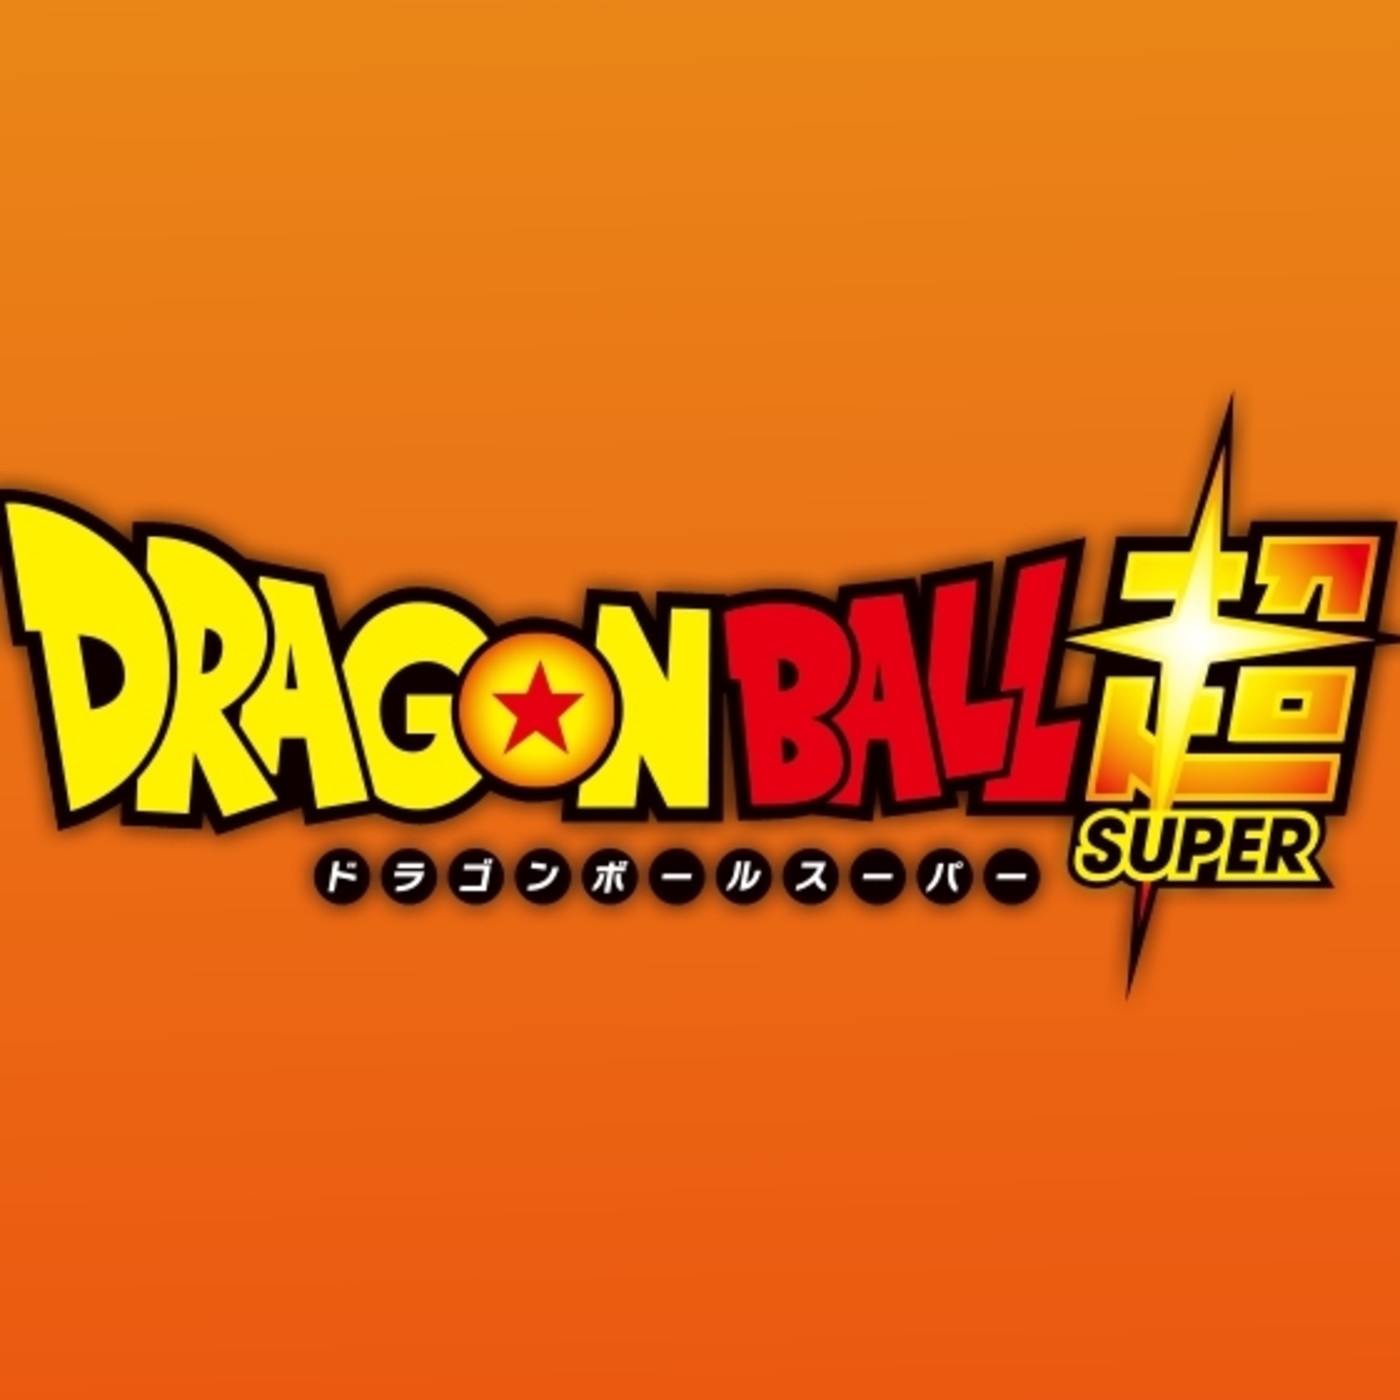 Gambatte Podcast | ’Dragon Ball Super’: Ep. 25, 26 y 27 en castellano